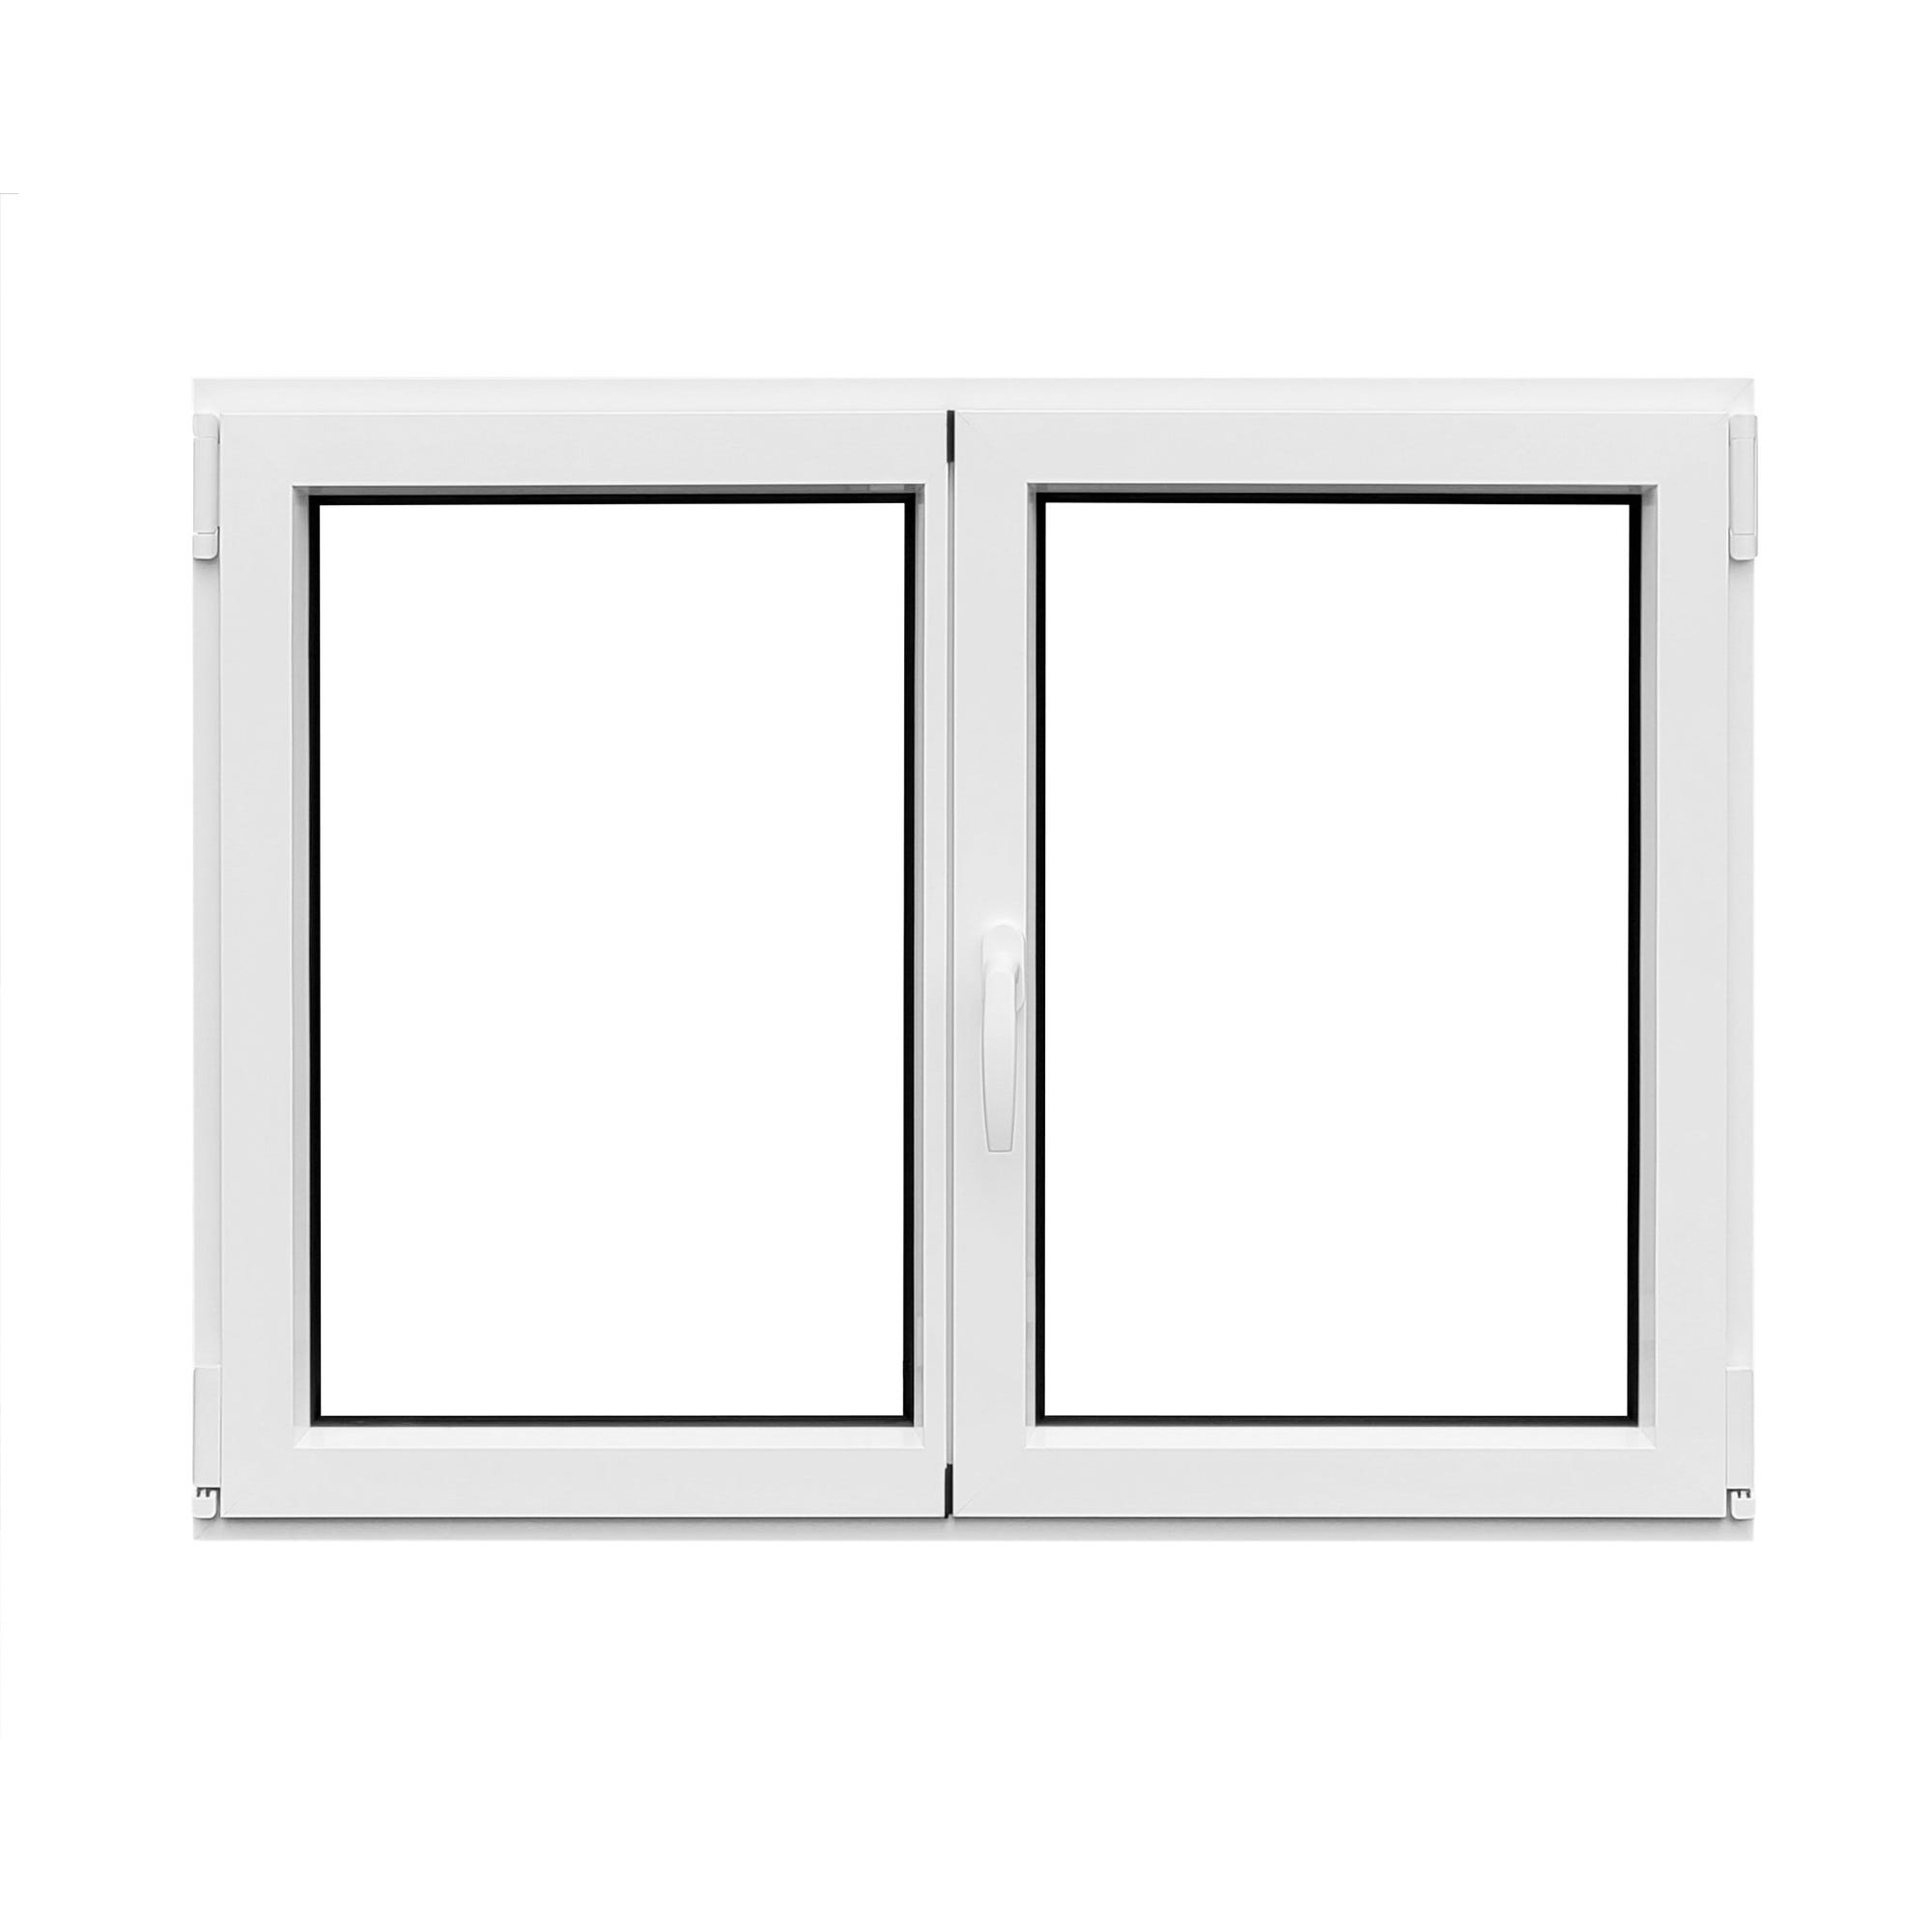 Fenêtre aluminium H.75 x l.100 cm oscillo-battant 2 vantaux blanc 0